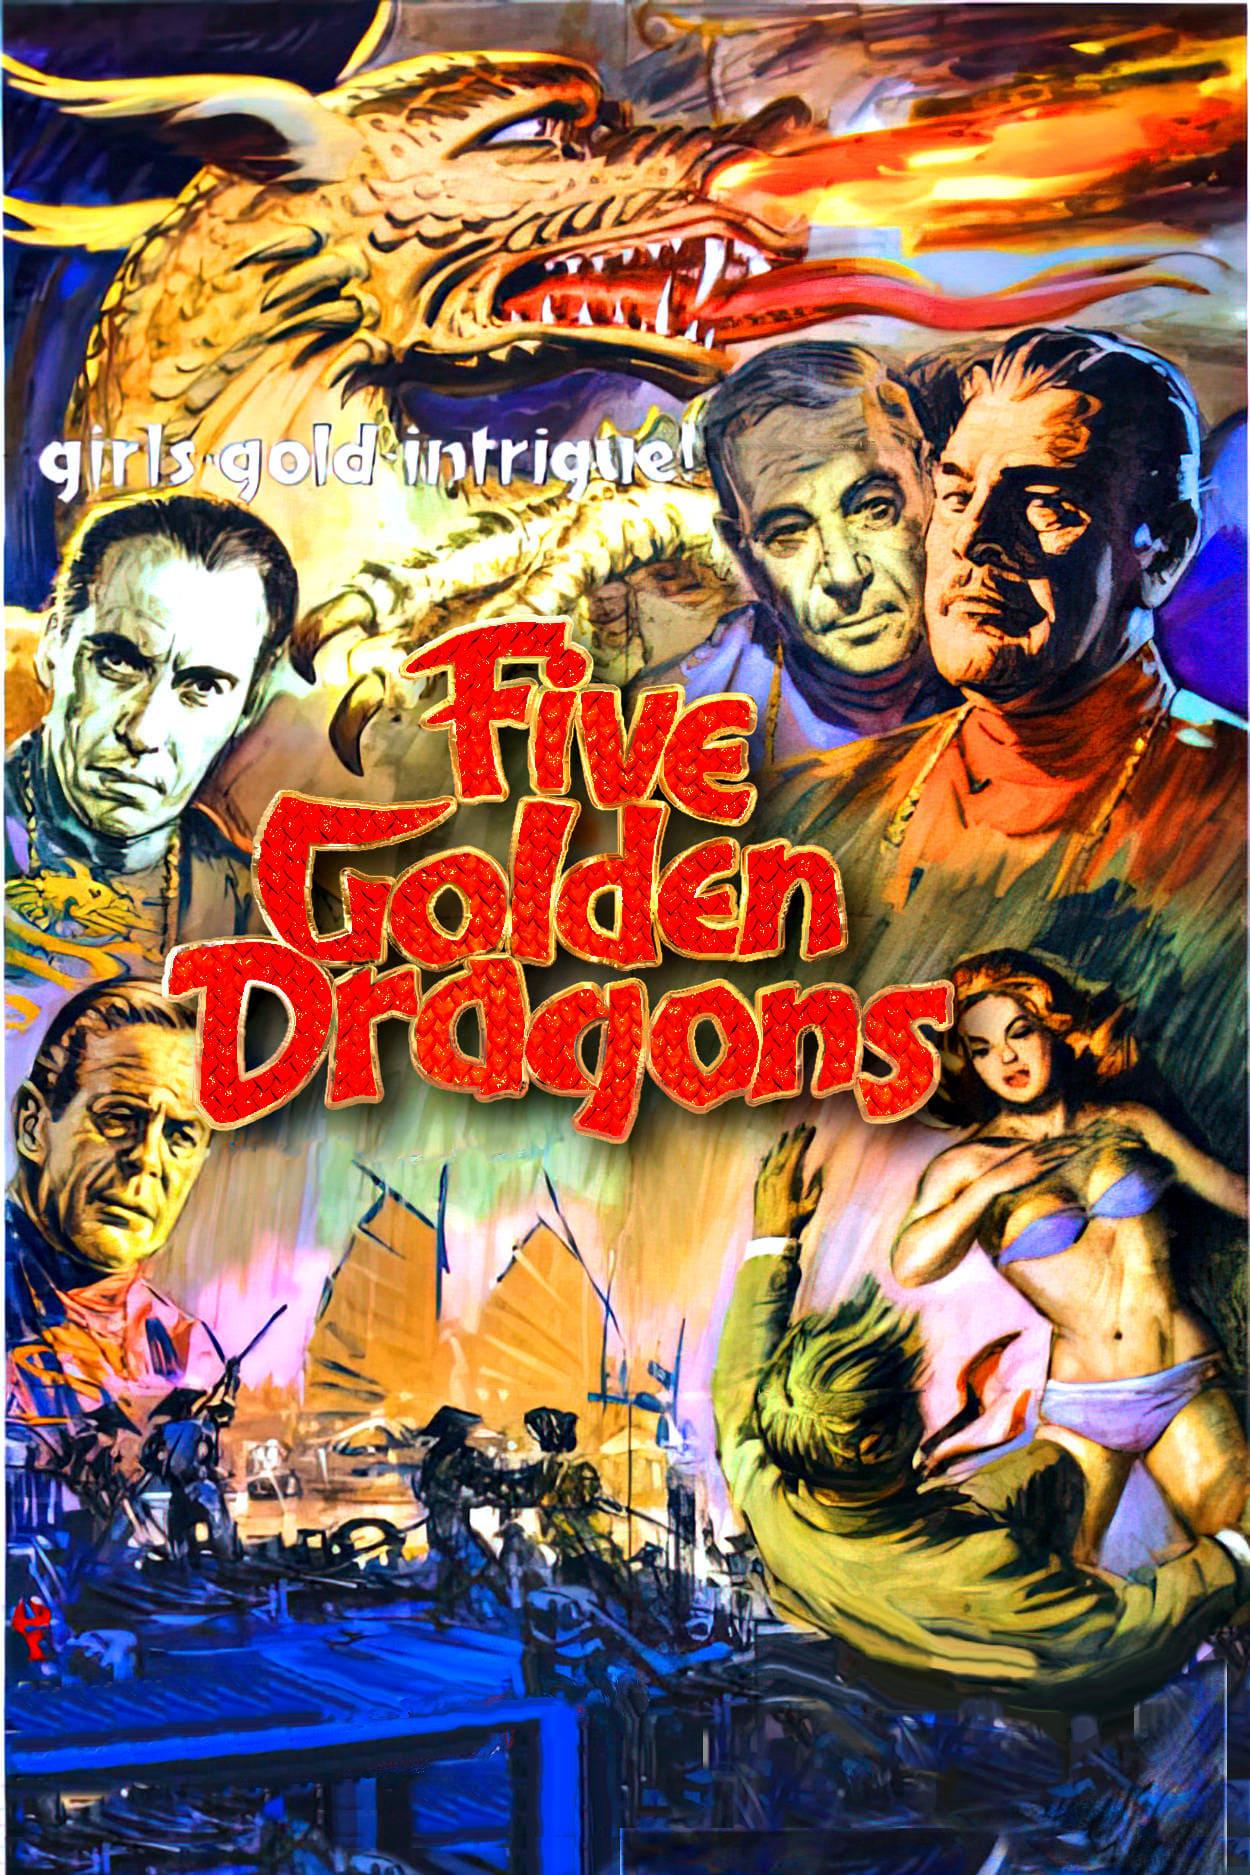 Five Golden Dragons poster